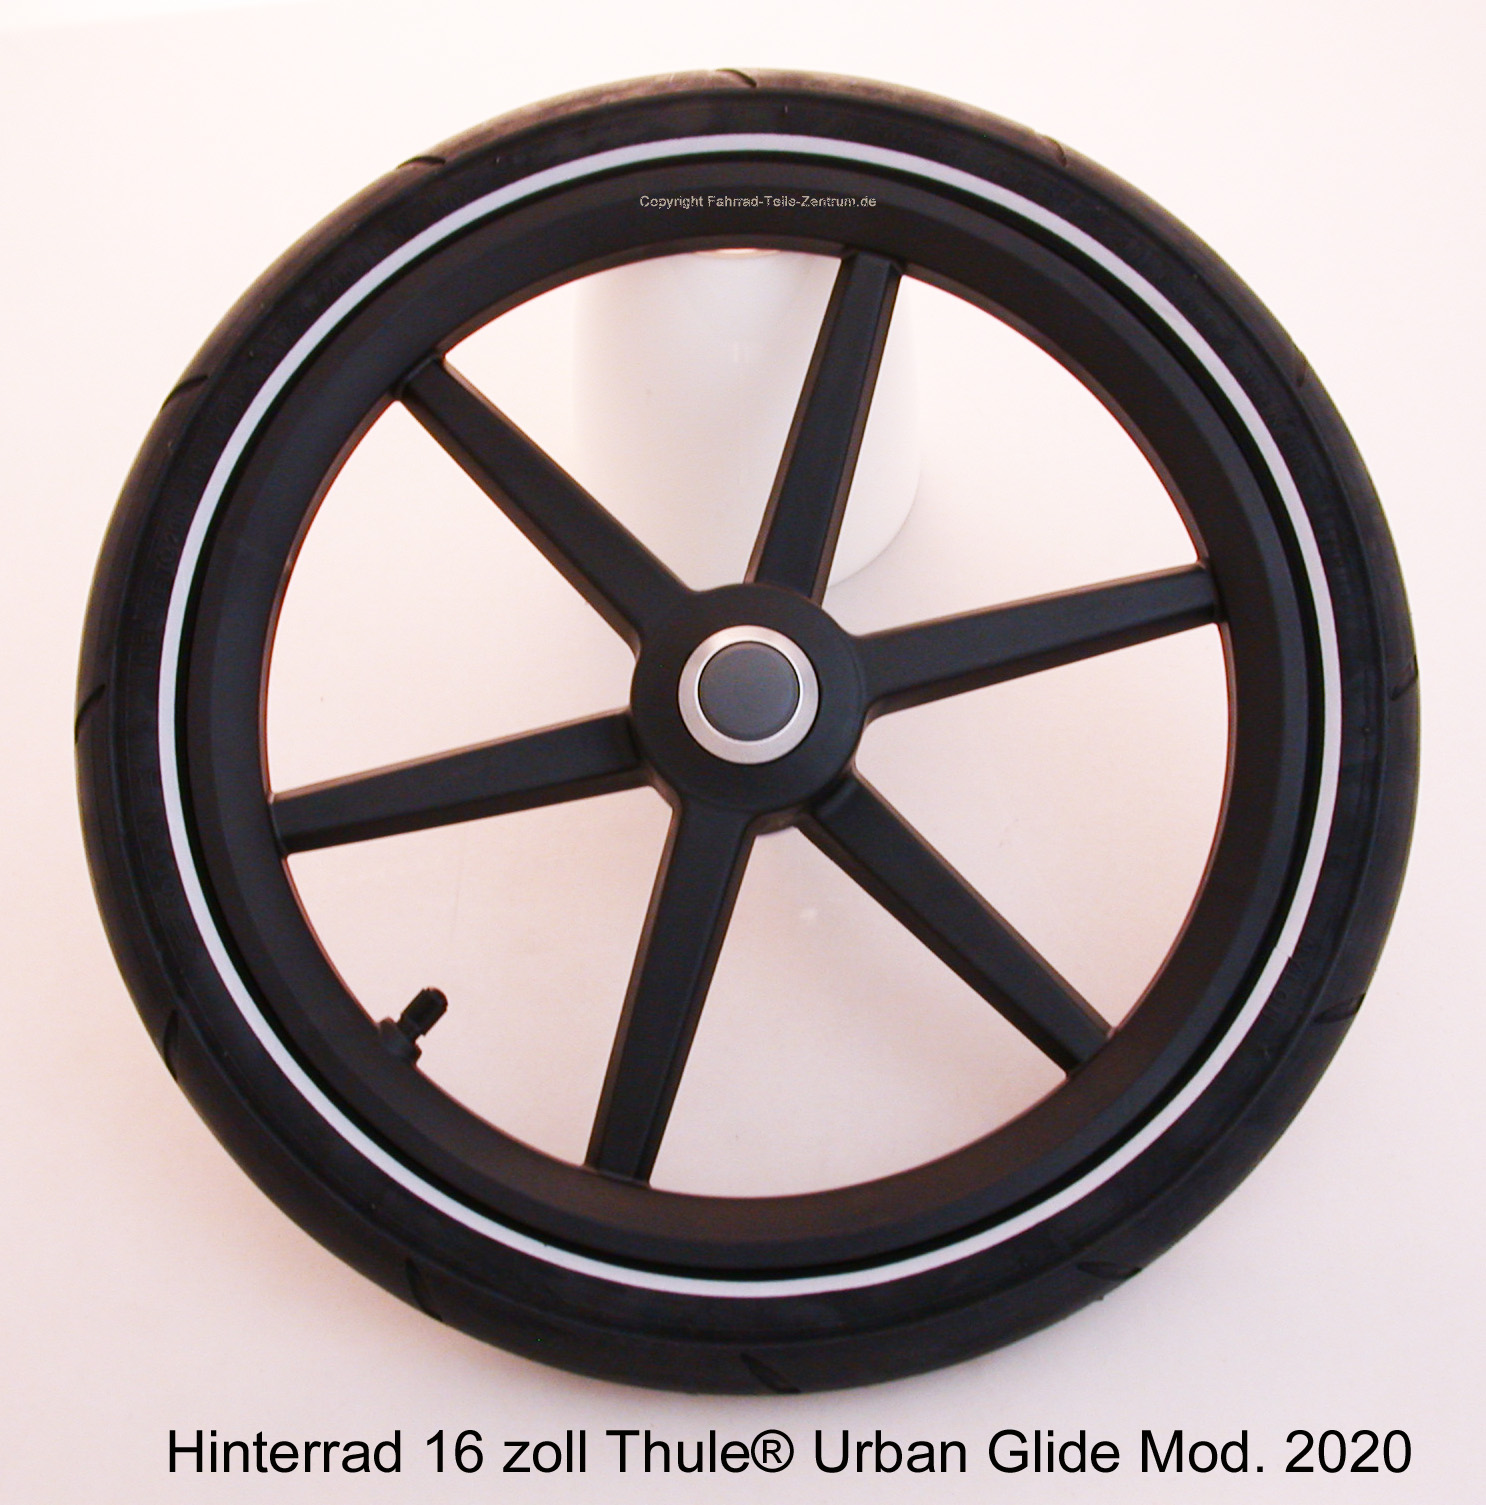 Thule Urban Glide 16 Zoll Hinterrad 